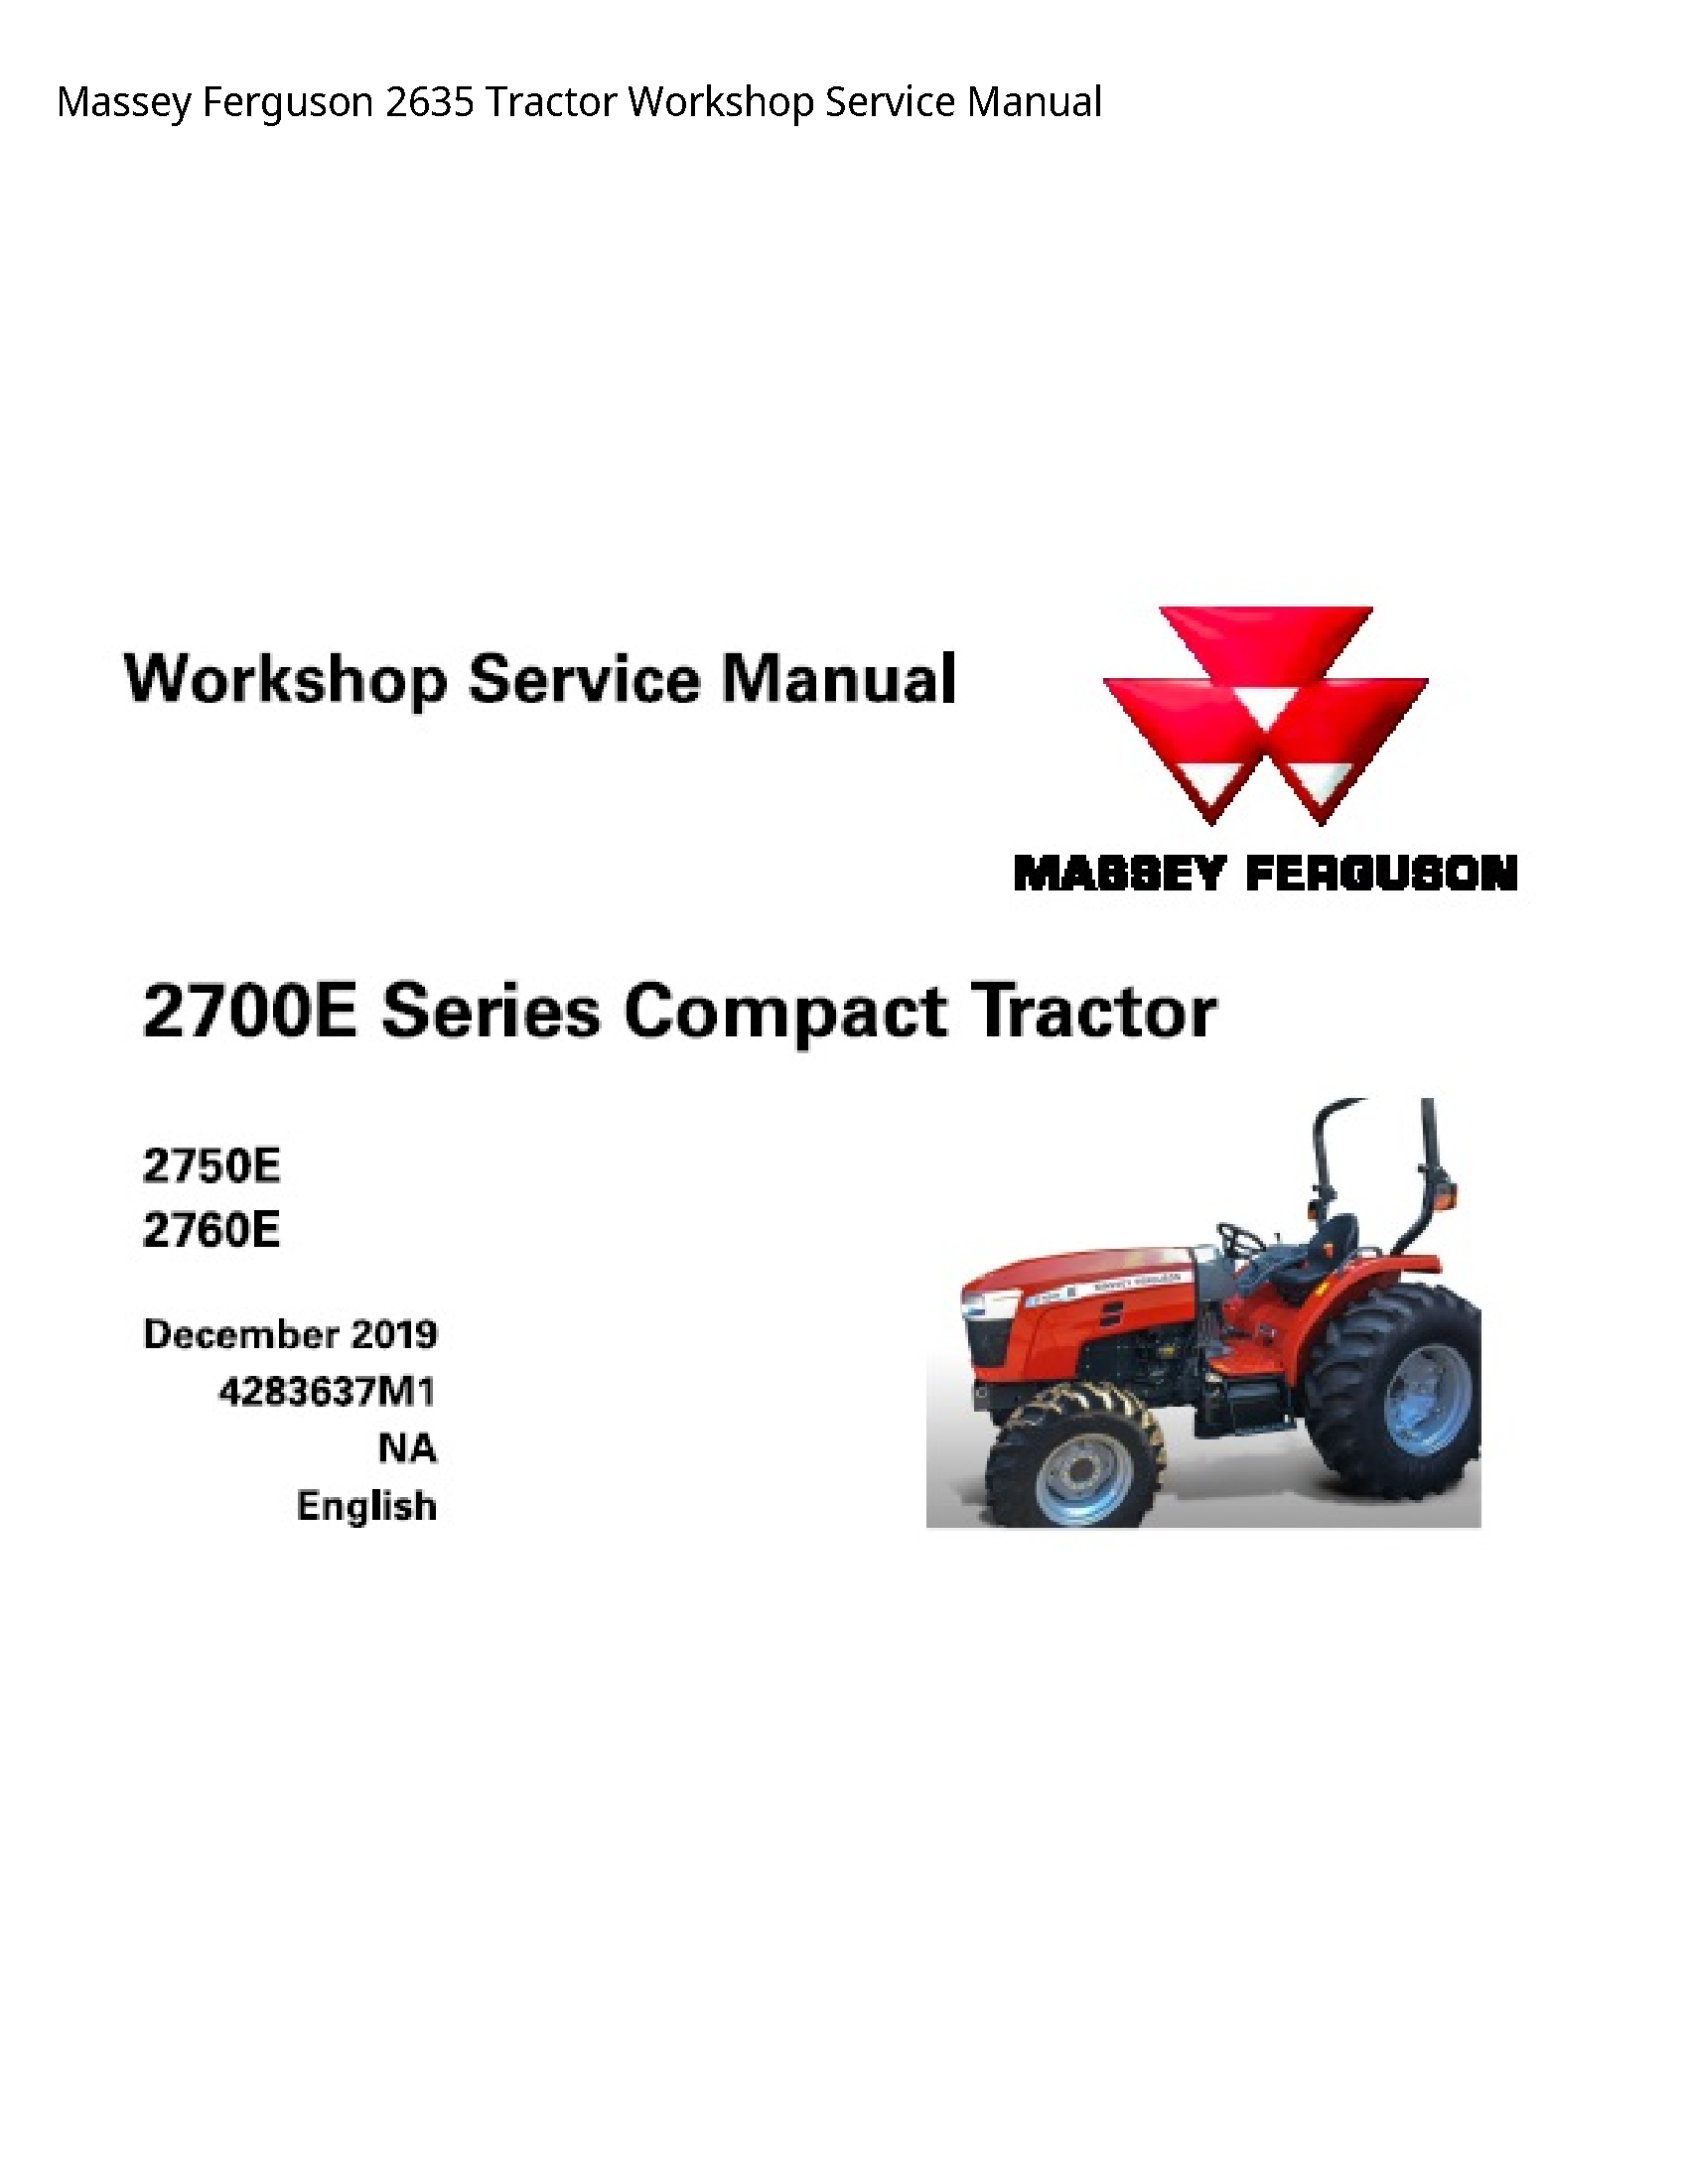 Massey Ferguson 2635 Tractor Service manual